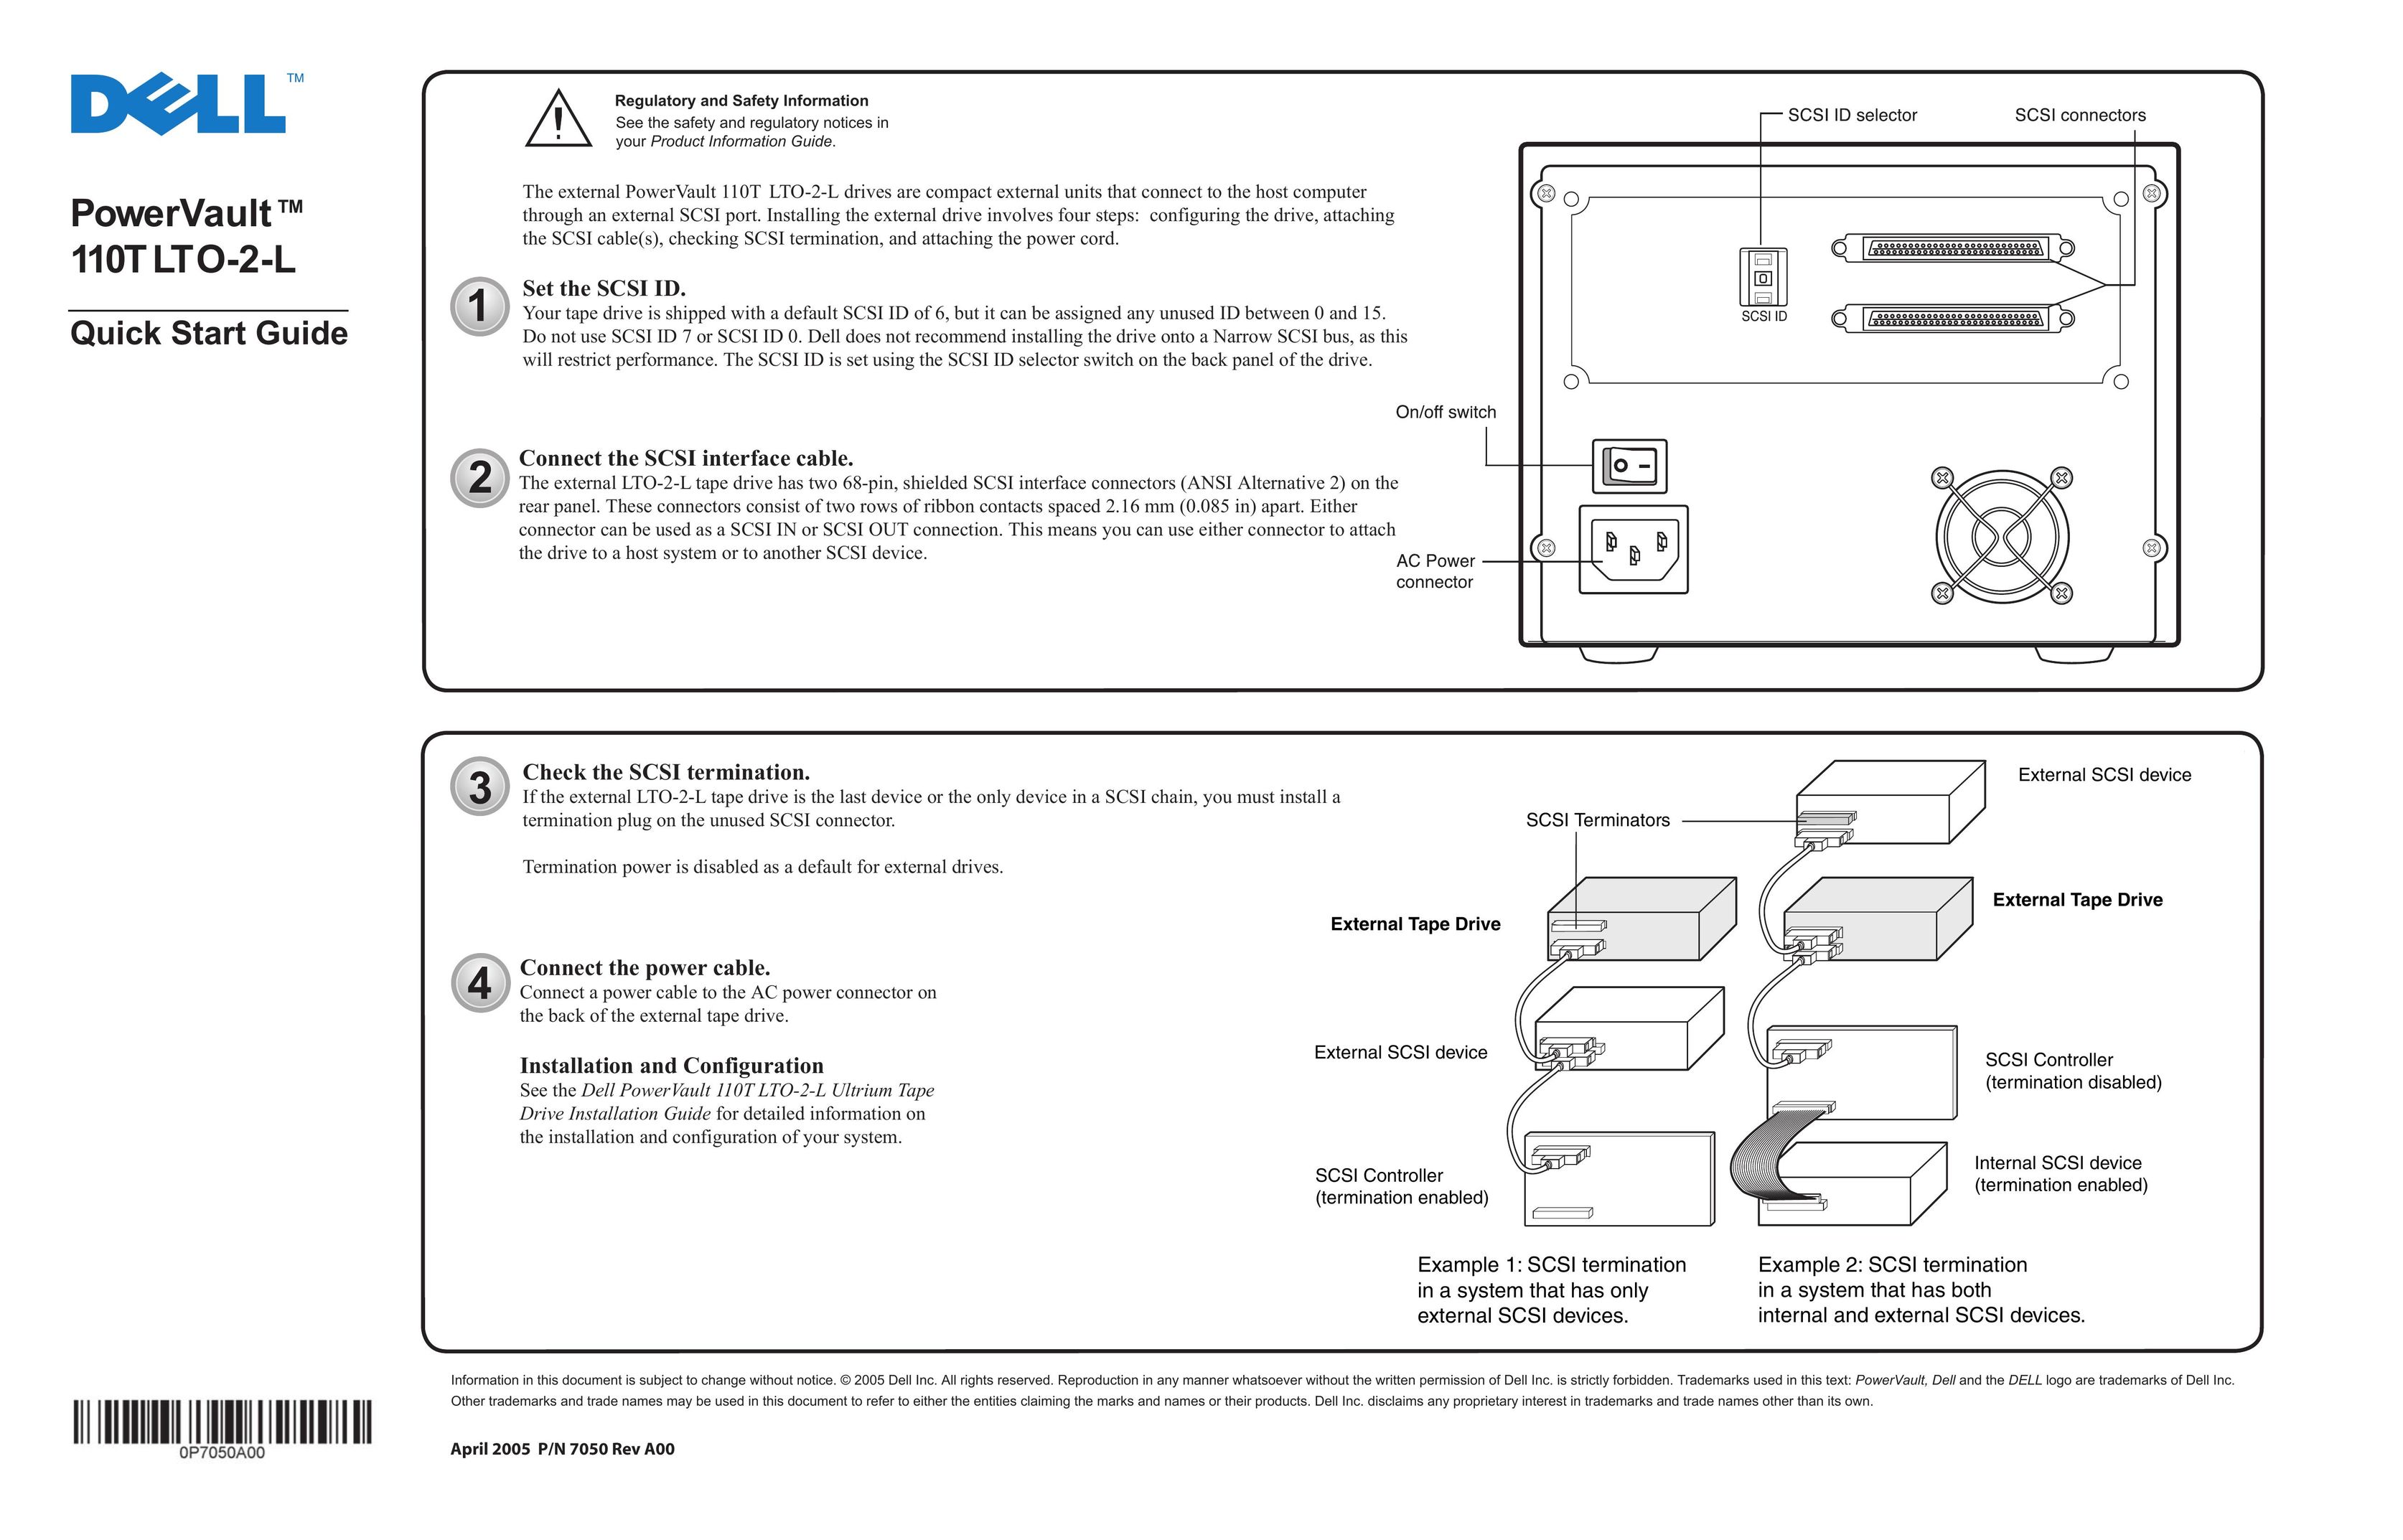 Dell 110T LTO-2-L Computer Drive User Manual